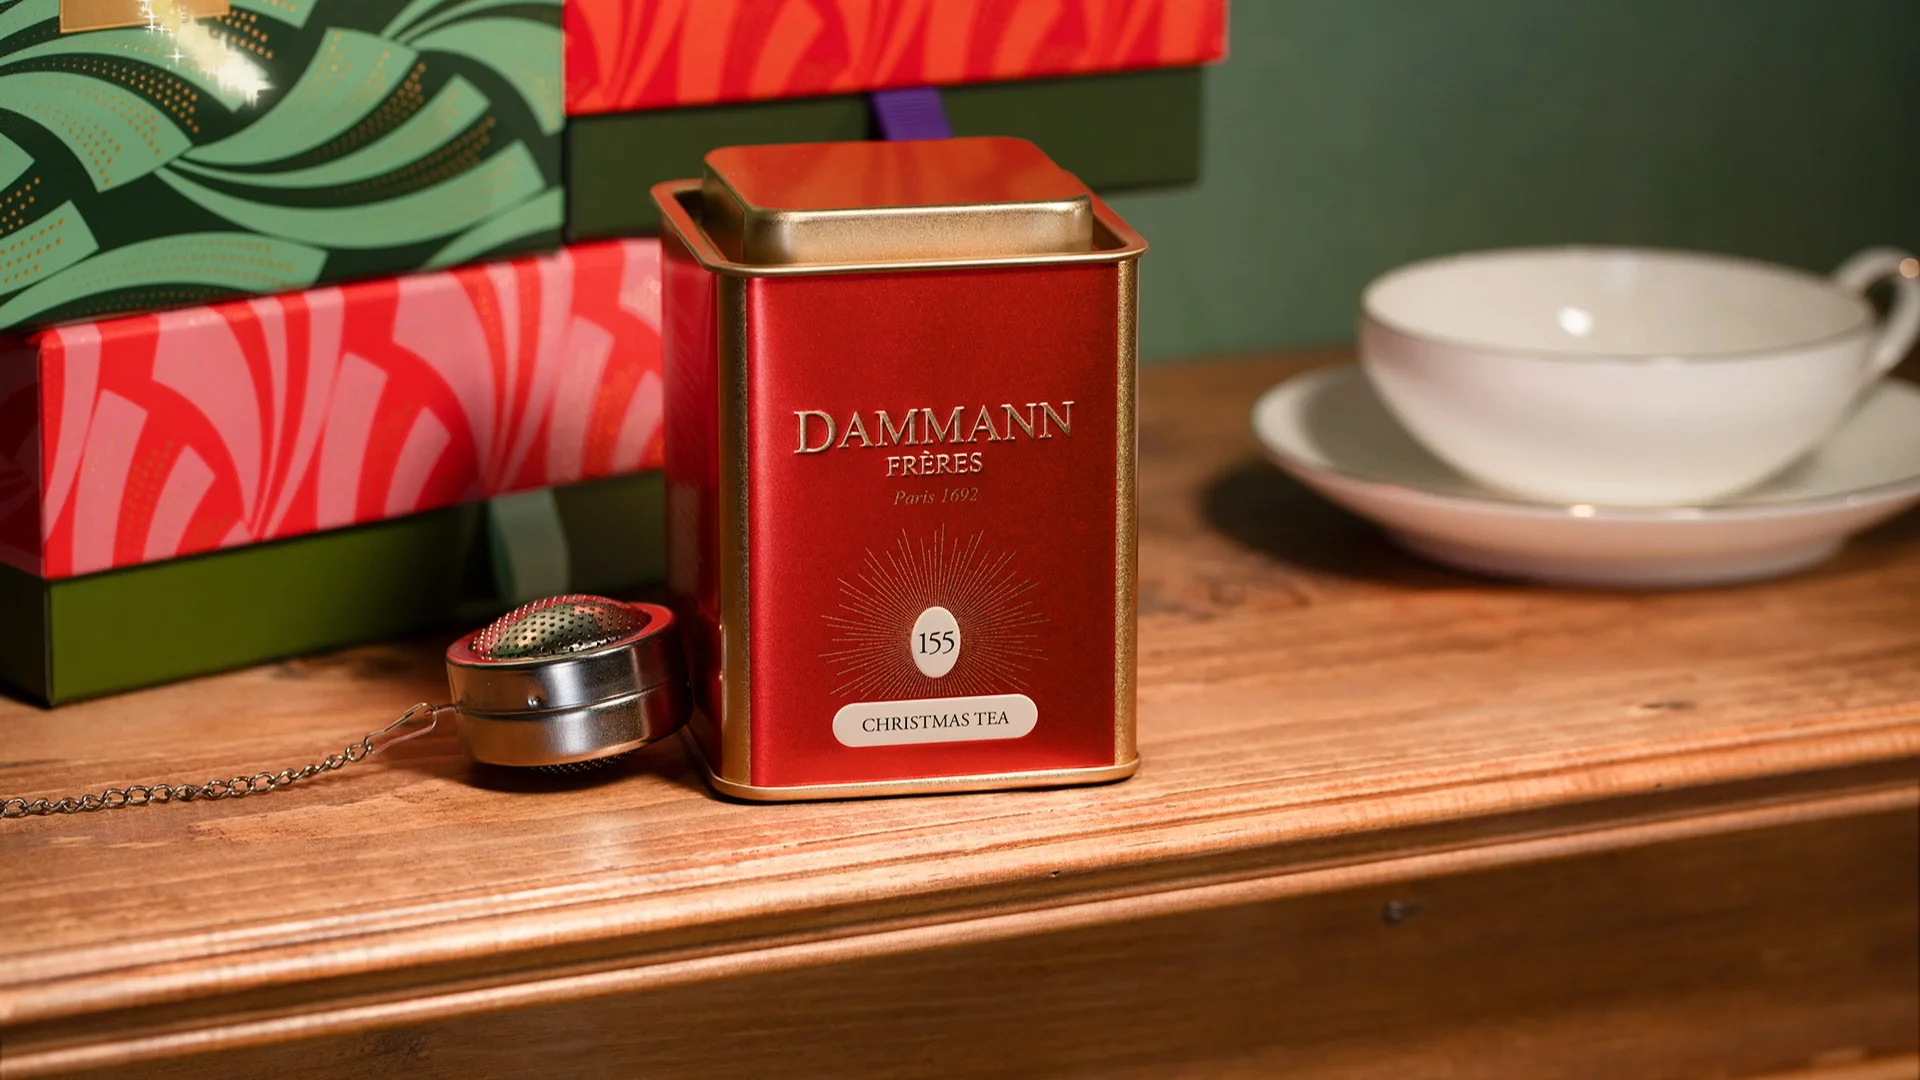 Christmas Tea Red - Dammann Frères 